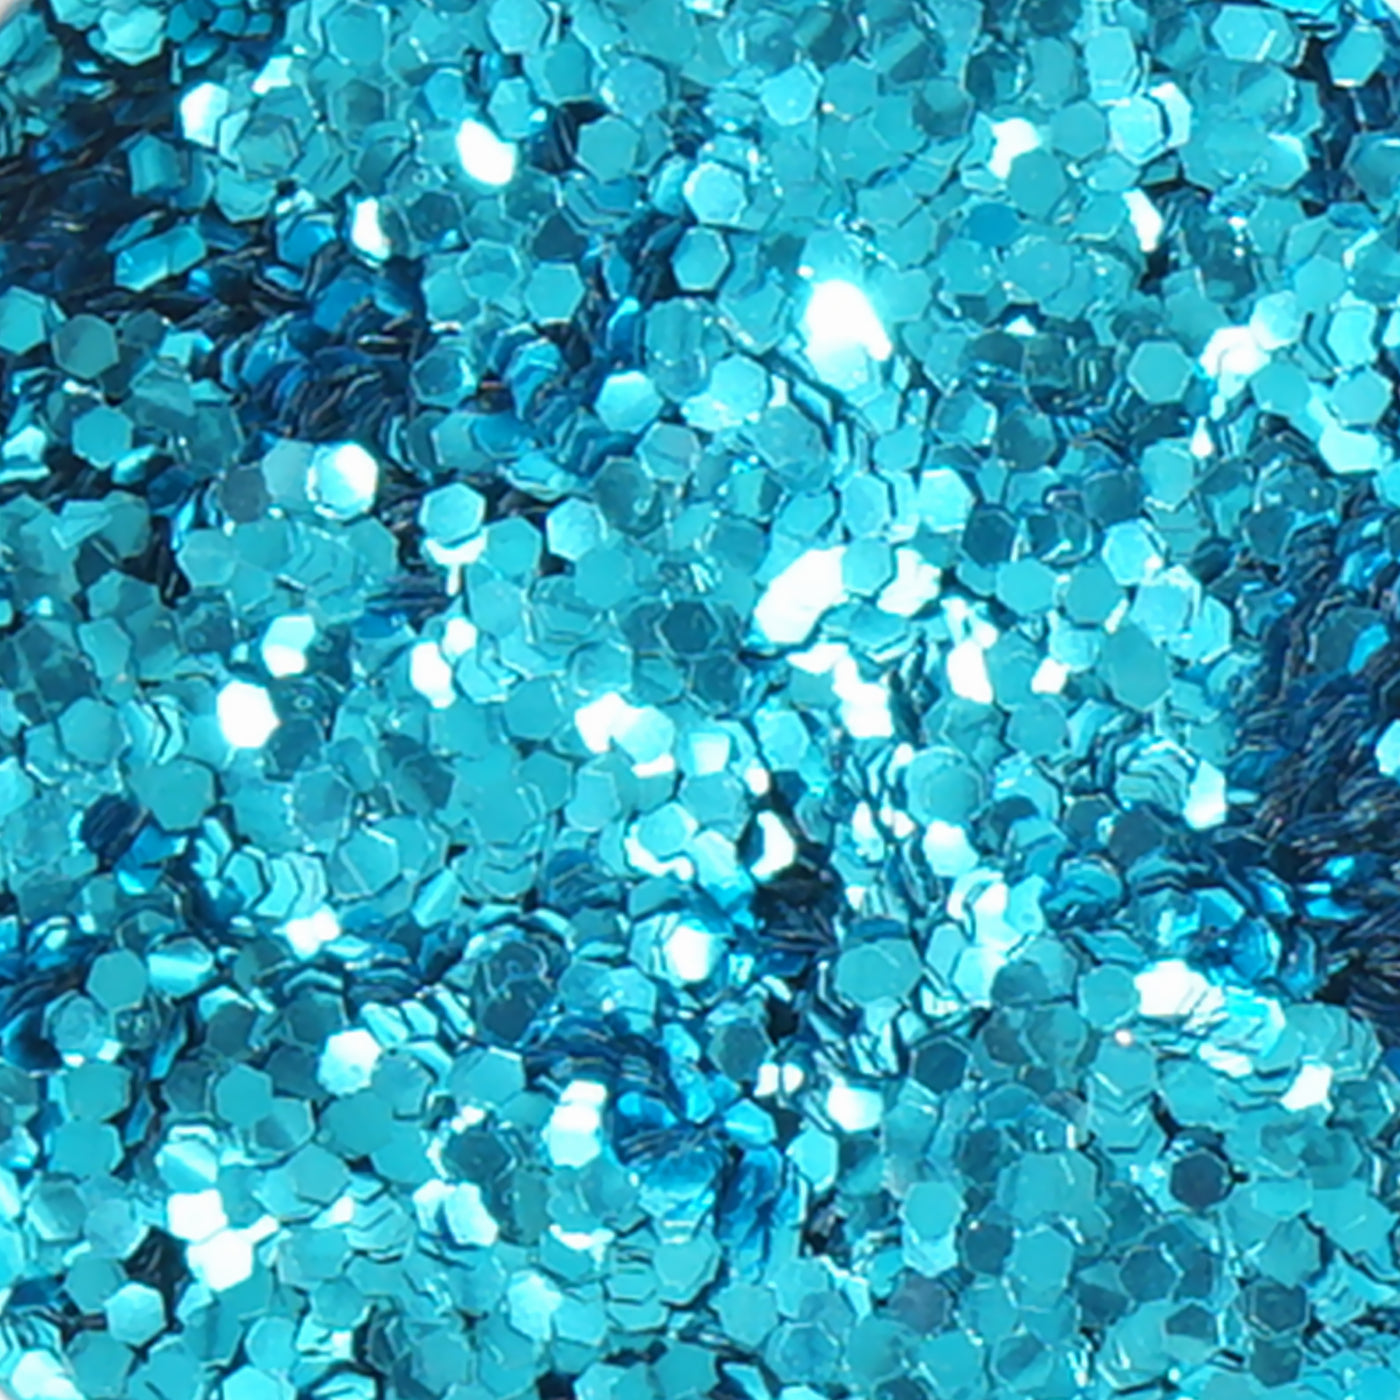 Sky Blue Biodegradable Cosmetic Glitter